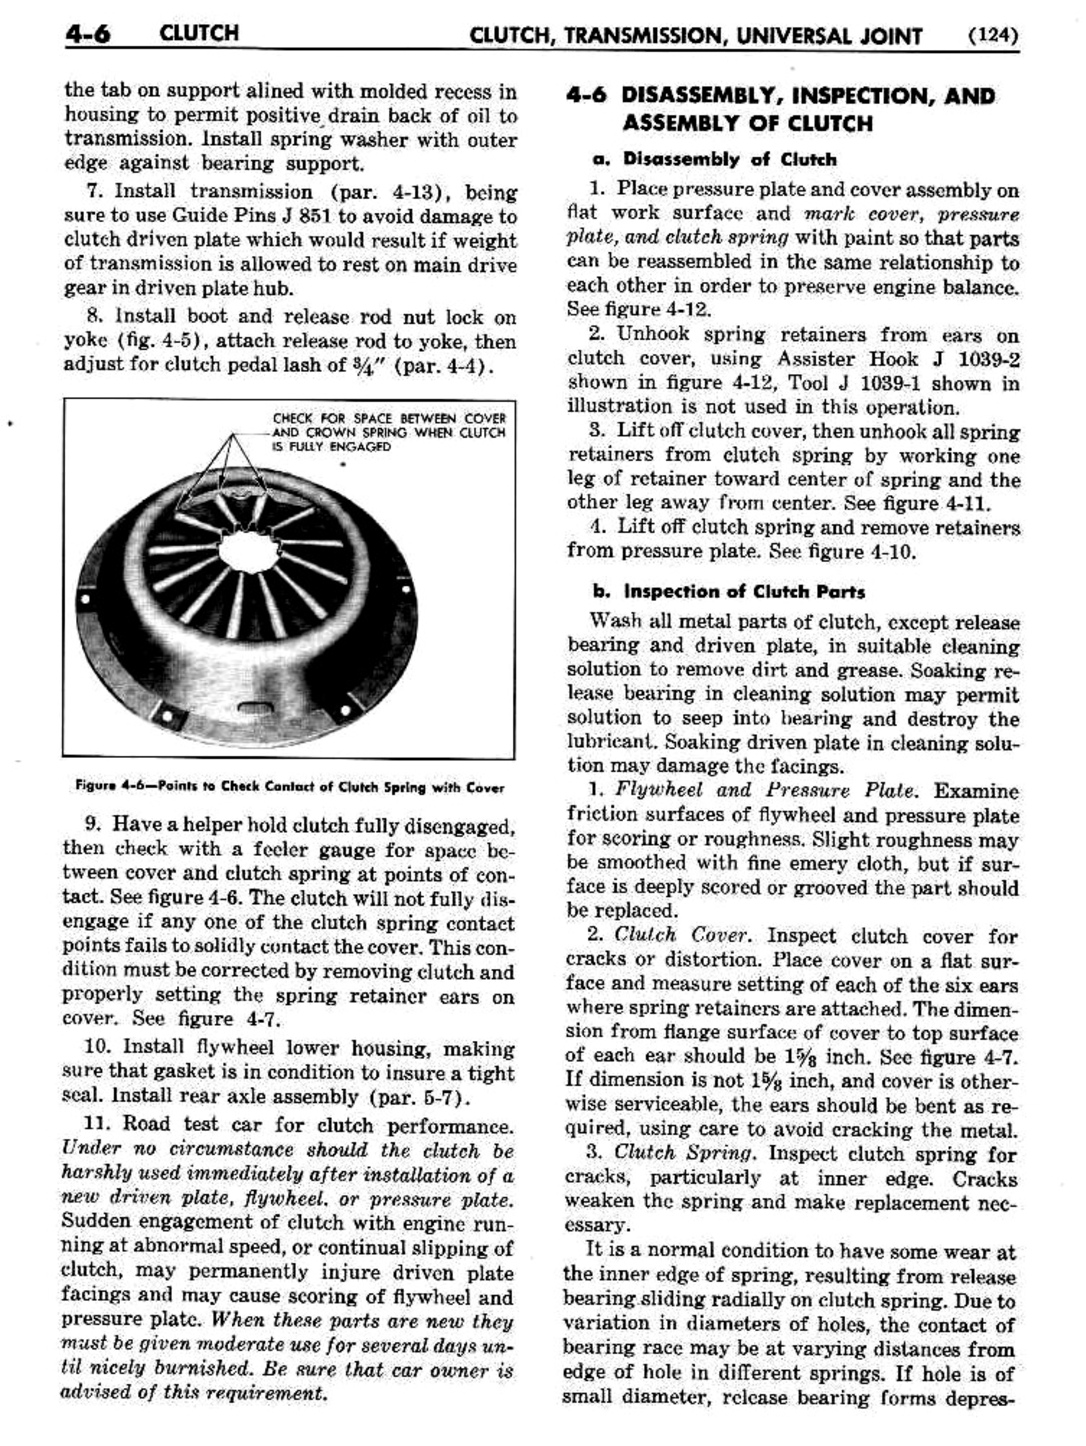 n_05 1951 Buick Shop Manual - Transmission-006-006.jpg